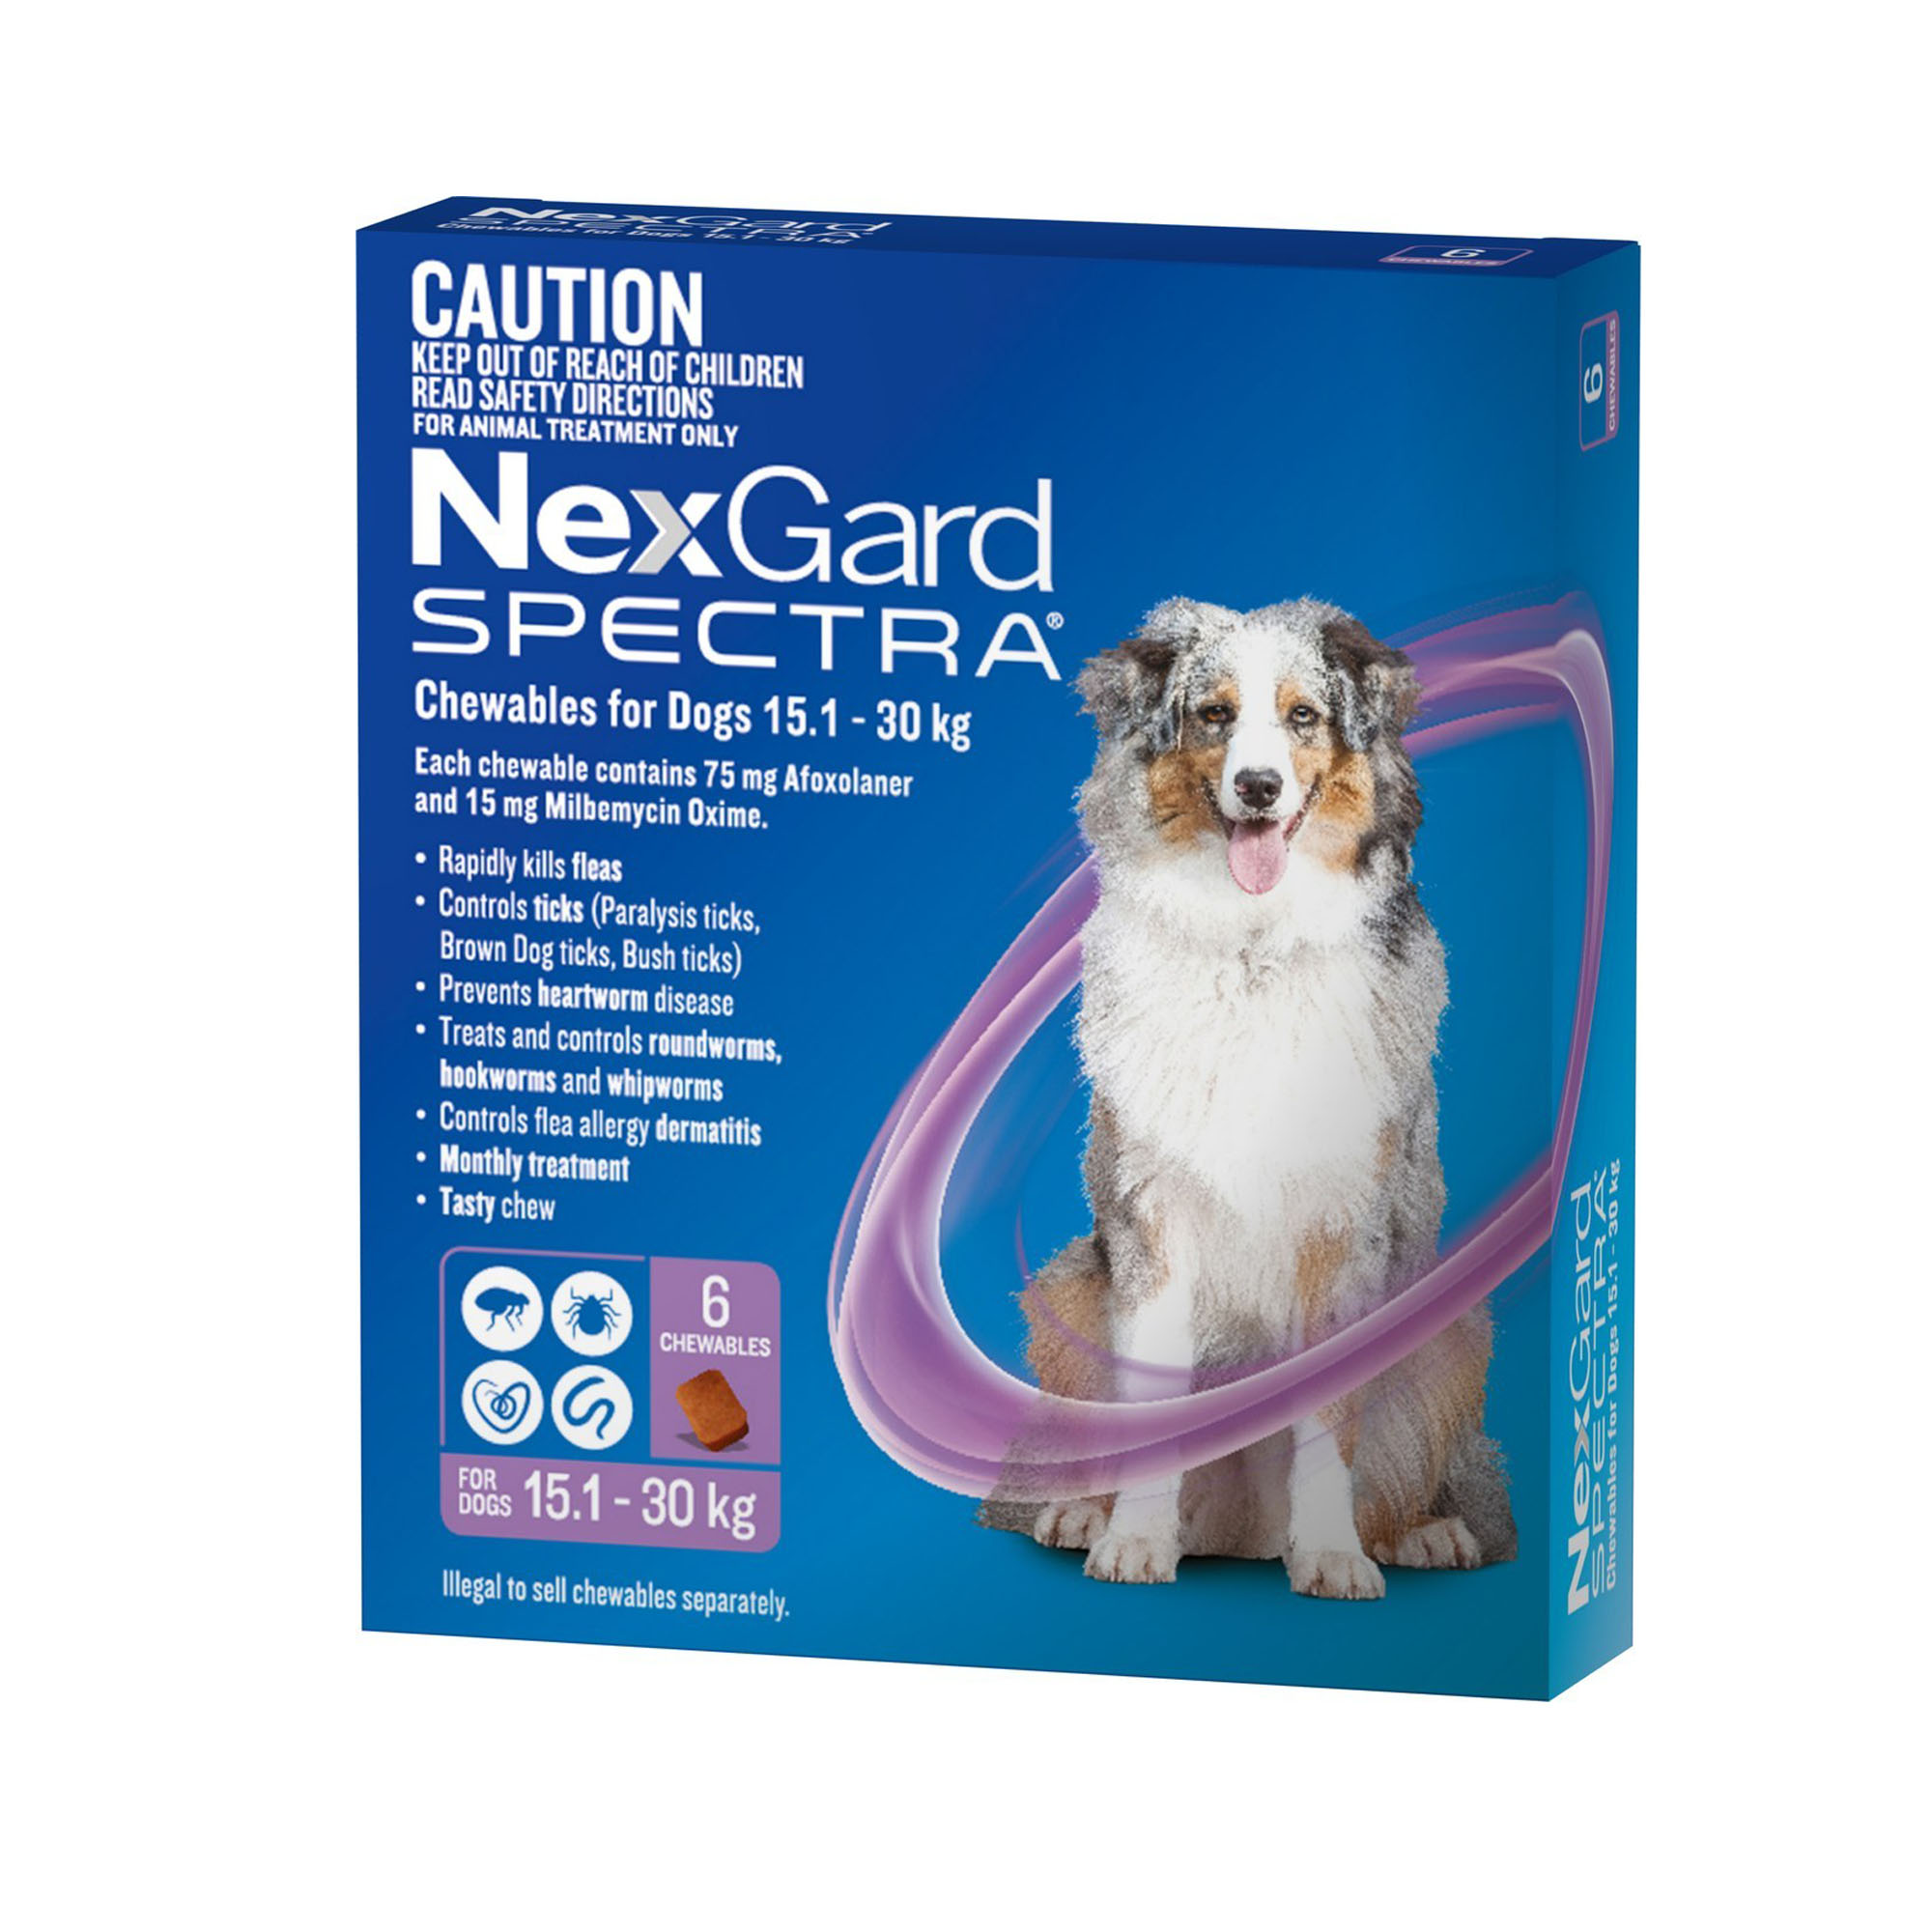 [1 viên] Nexgard Spectra cho chó từ 15.1 đến 30kg viên nhai trị ve, ghẻ, sổ giun